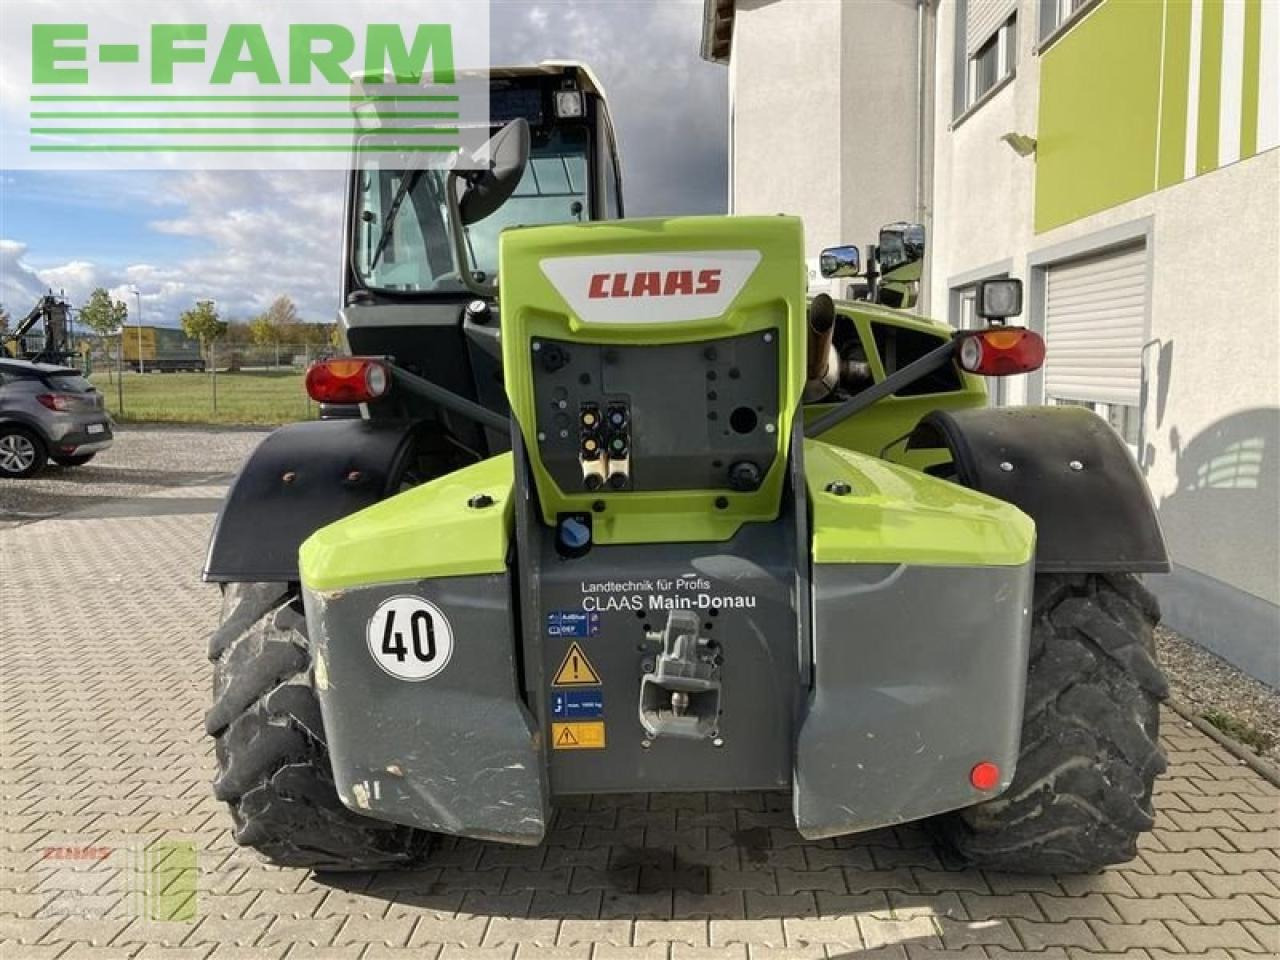 Farm tractor CLAAS scorpion 756 varipower